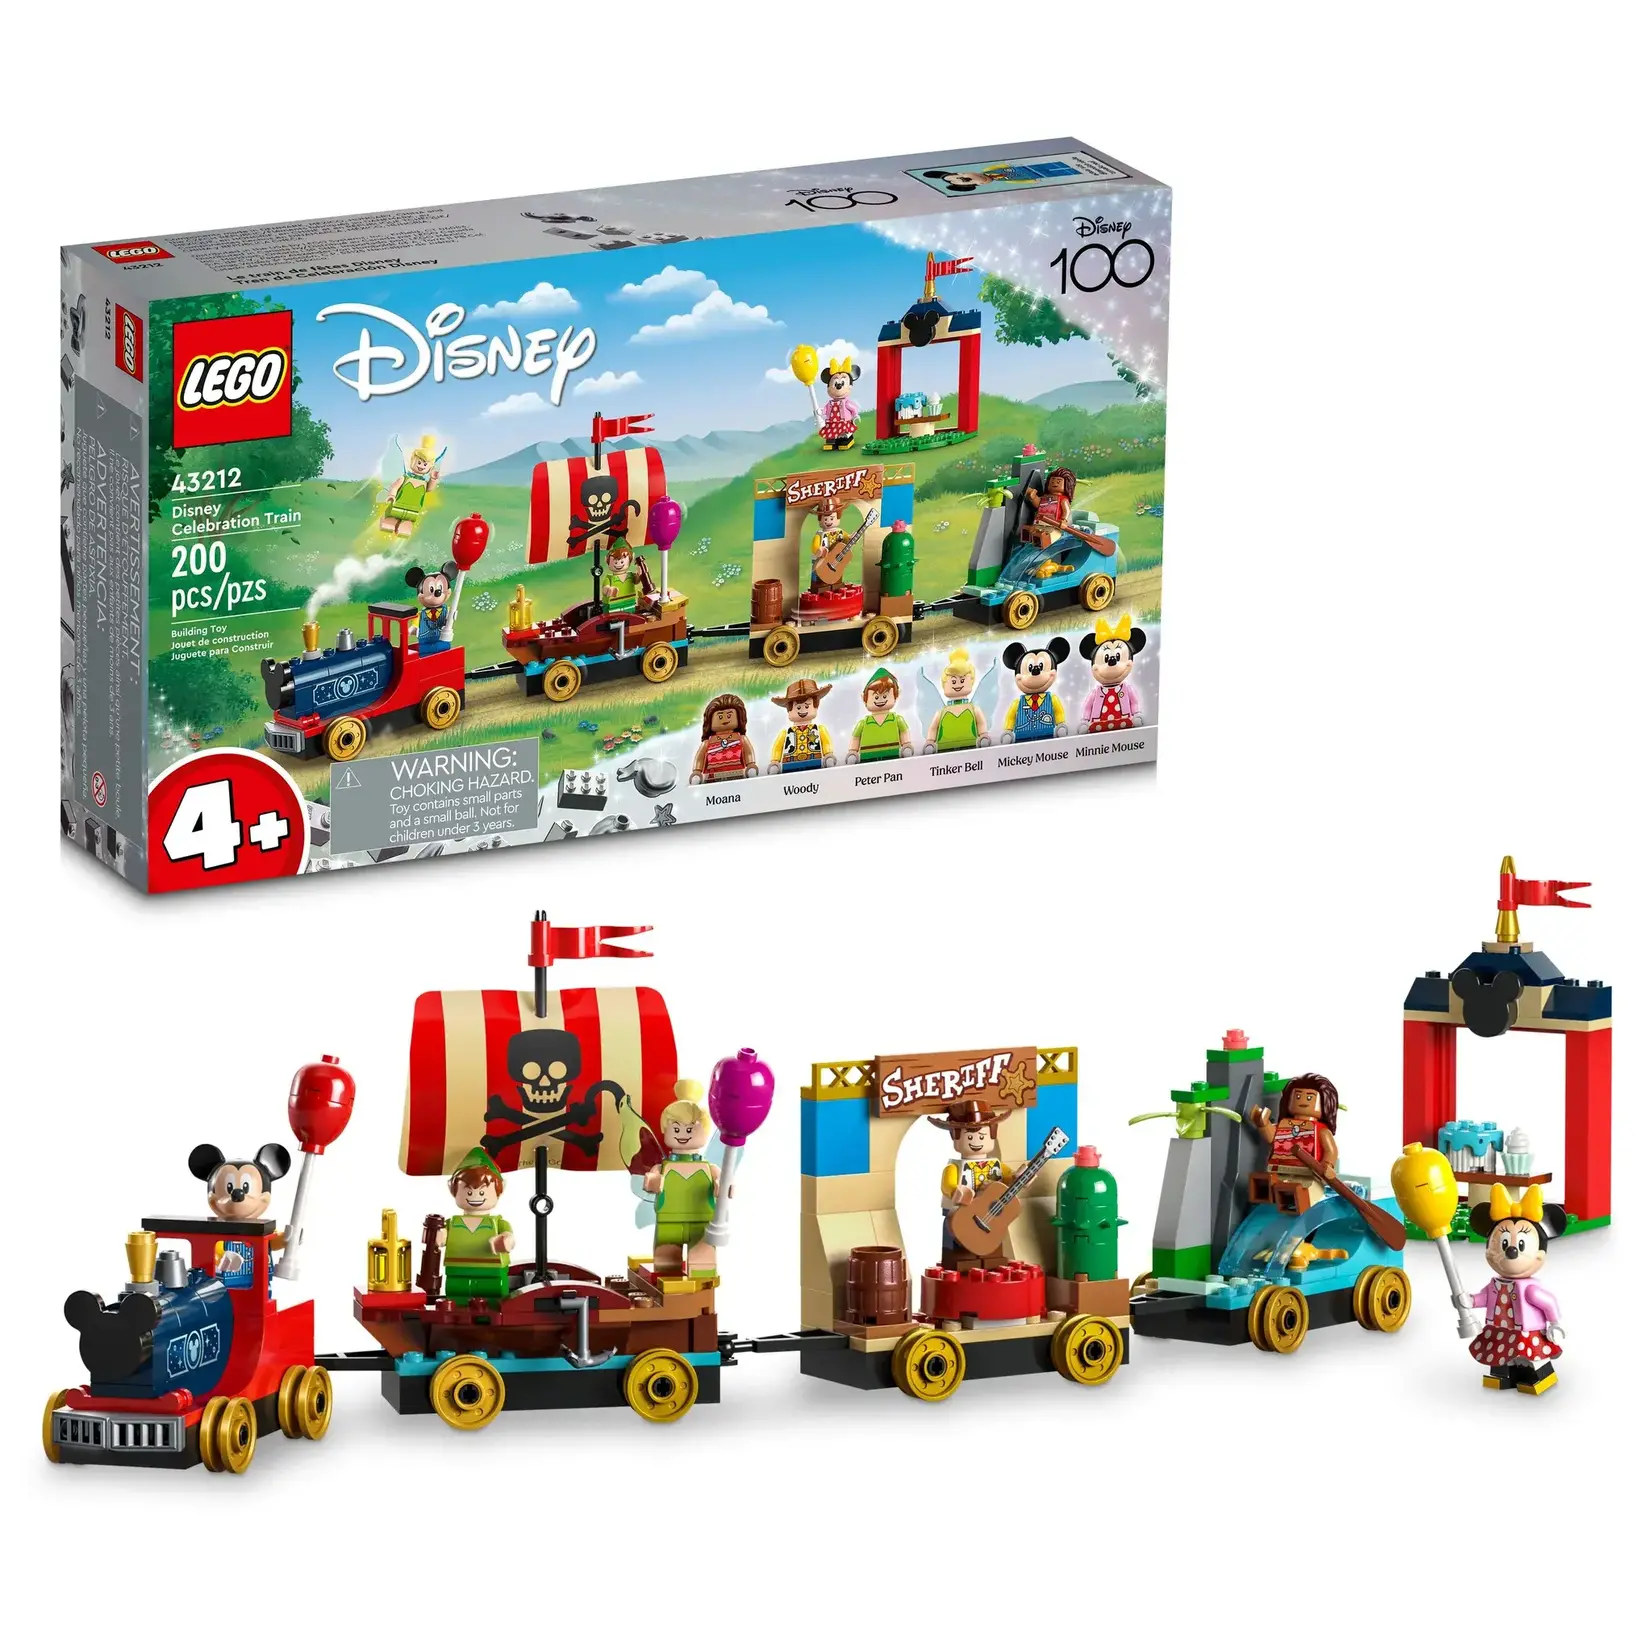 LEGO 43212 LEGO® Disney Disney Celebration Train